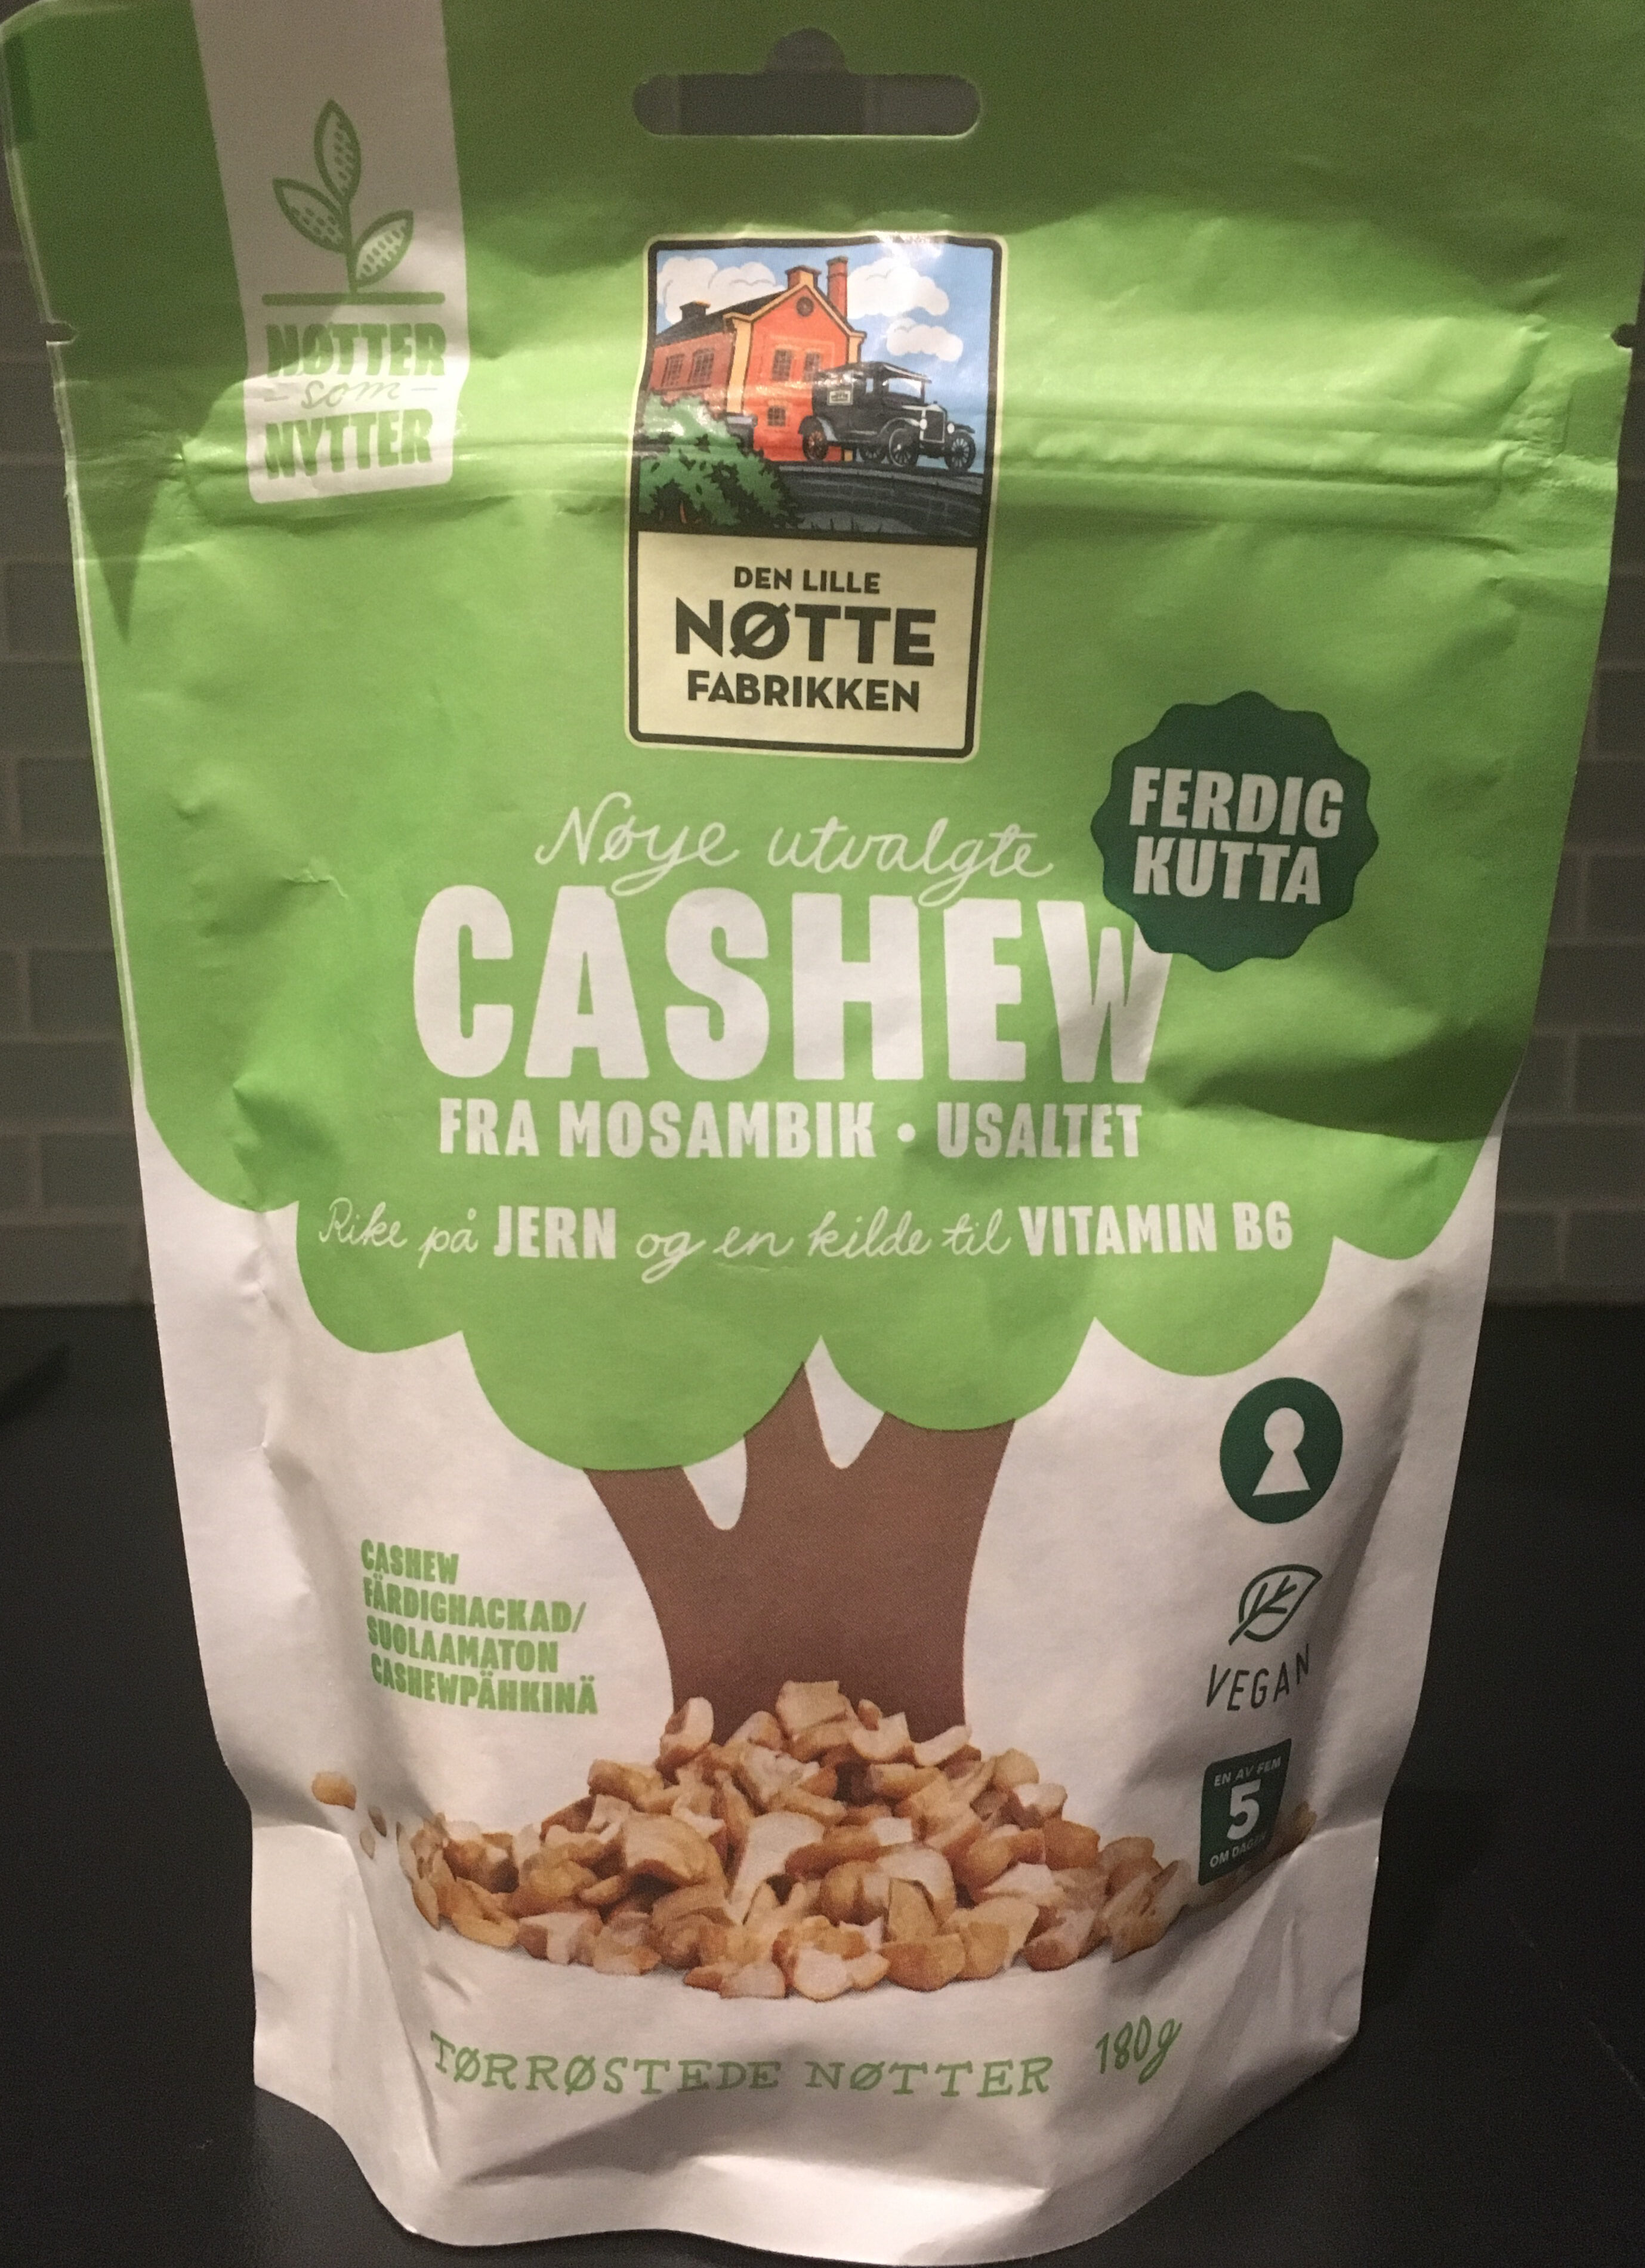 Cashew fra Mosambik - Usaltet - Produkt